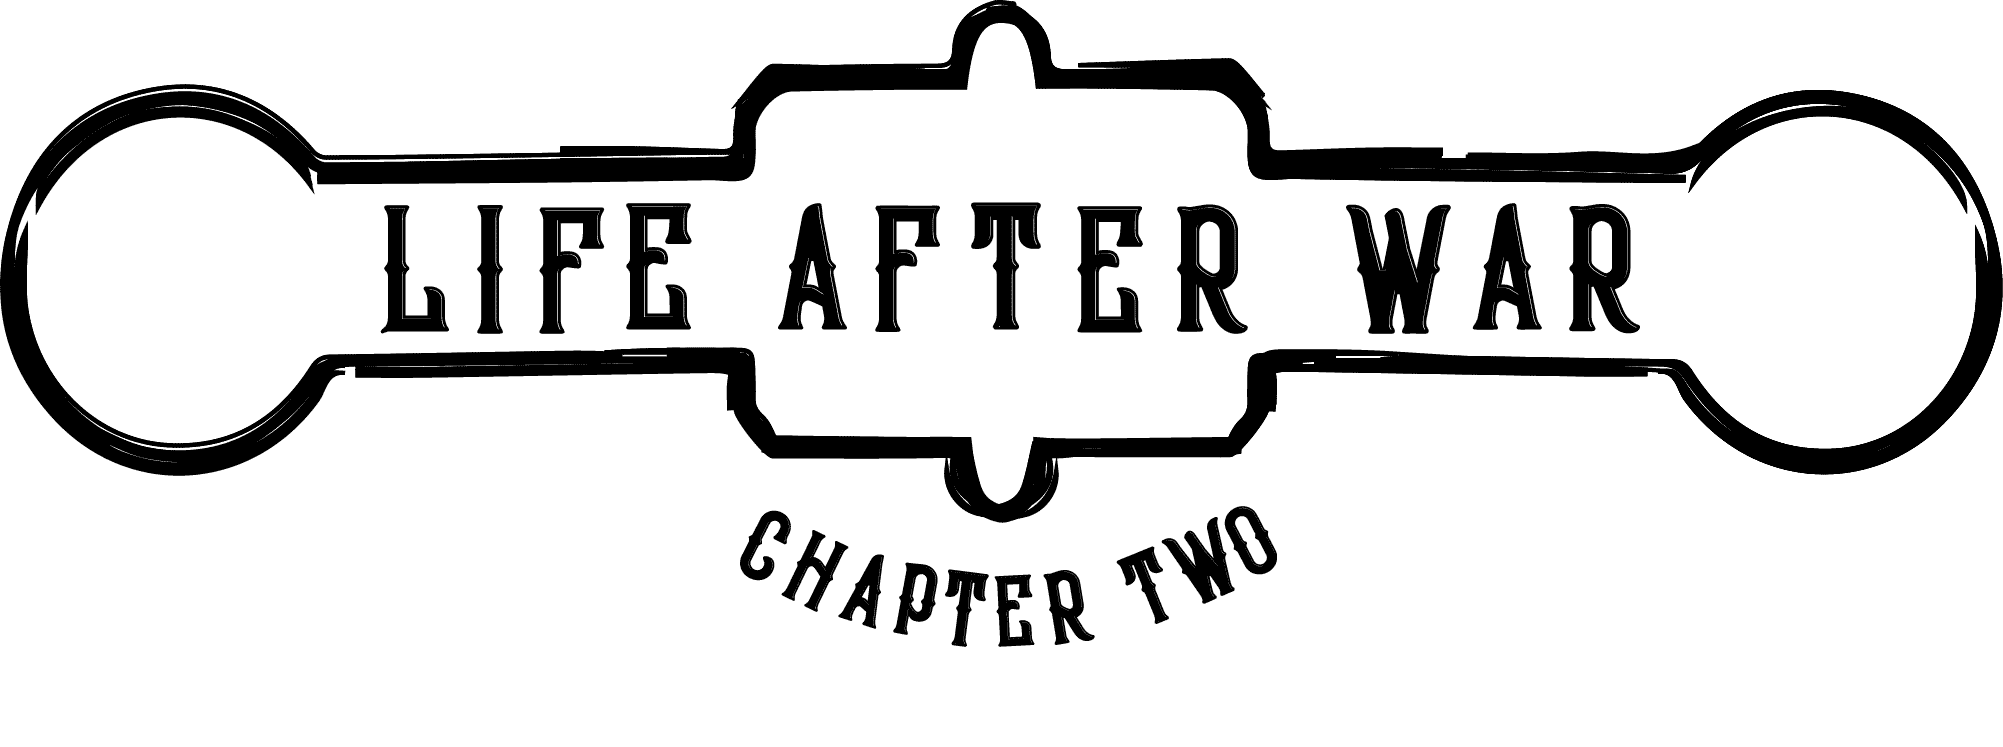 chapter_2_header